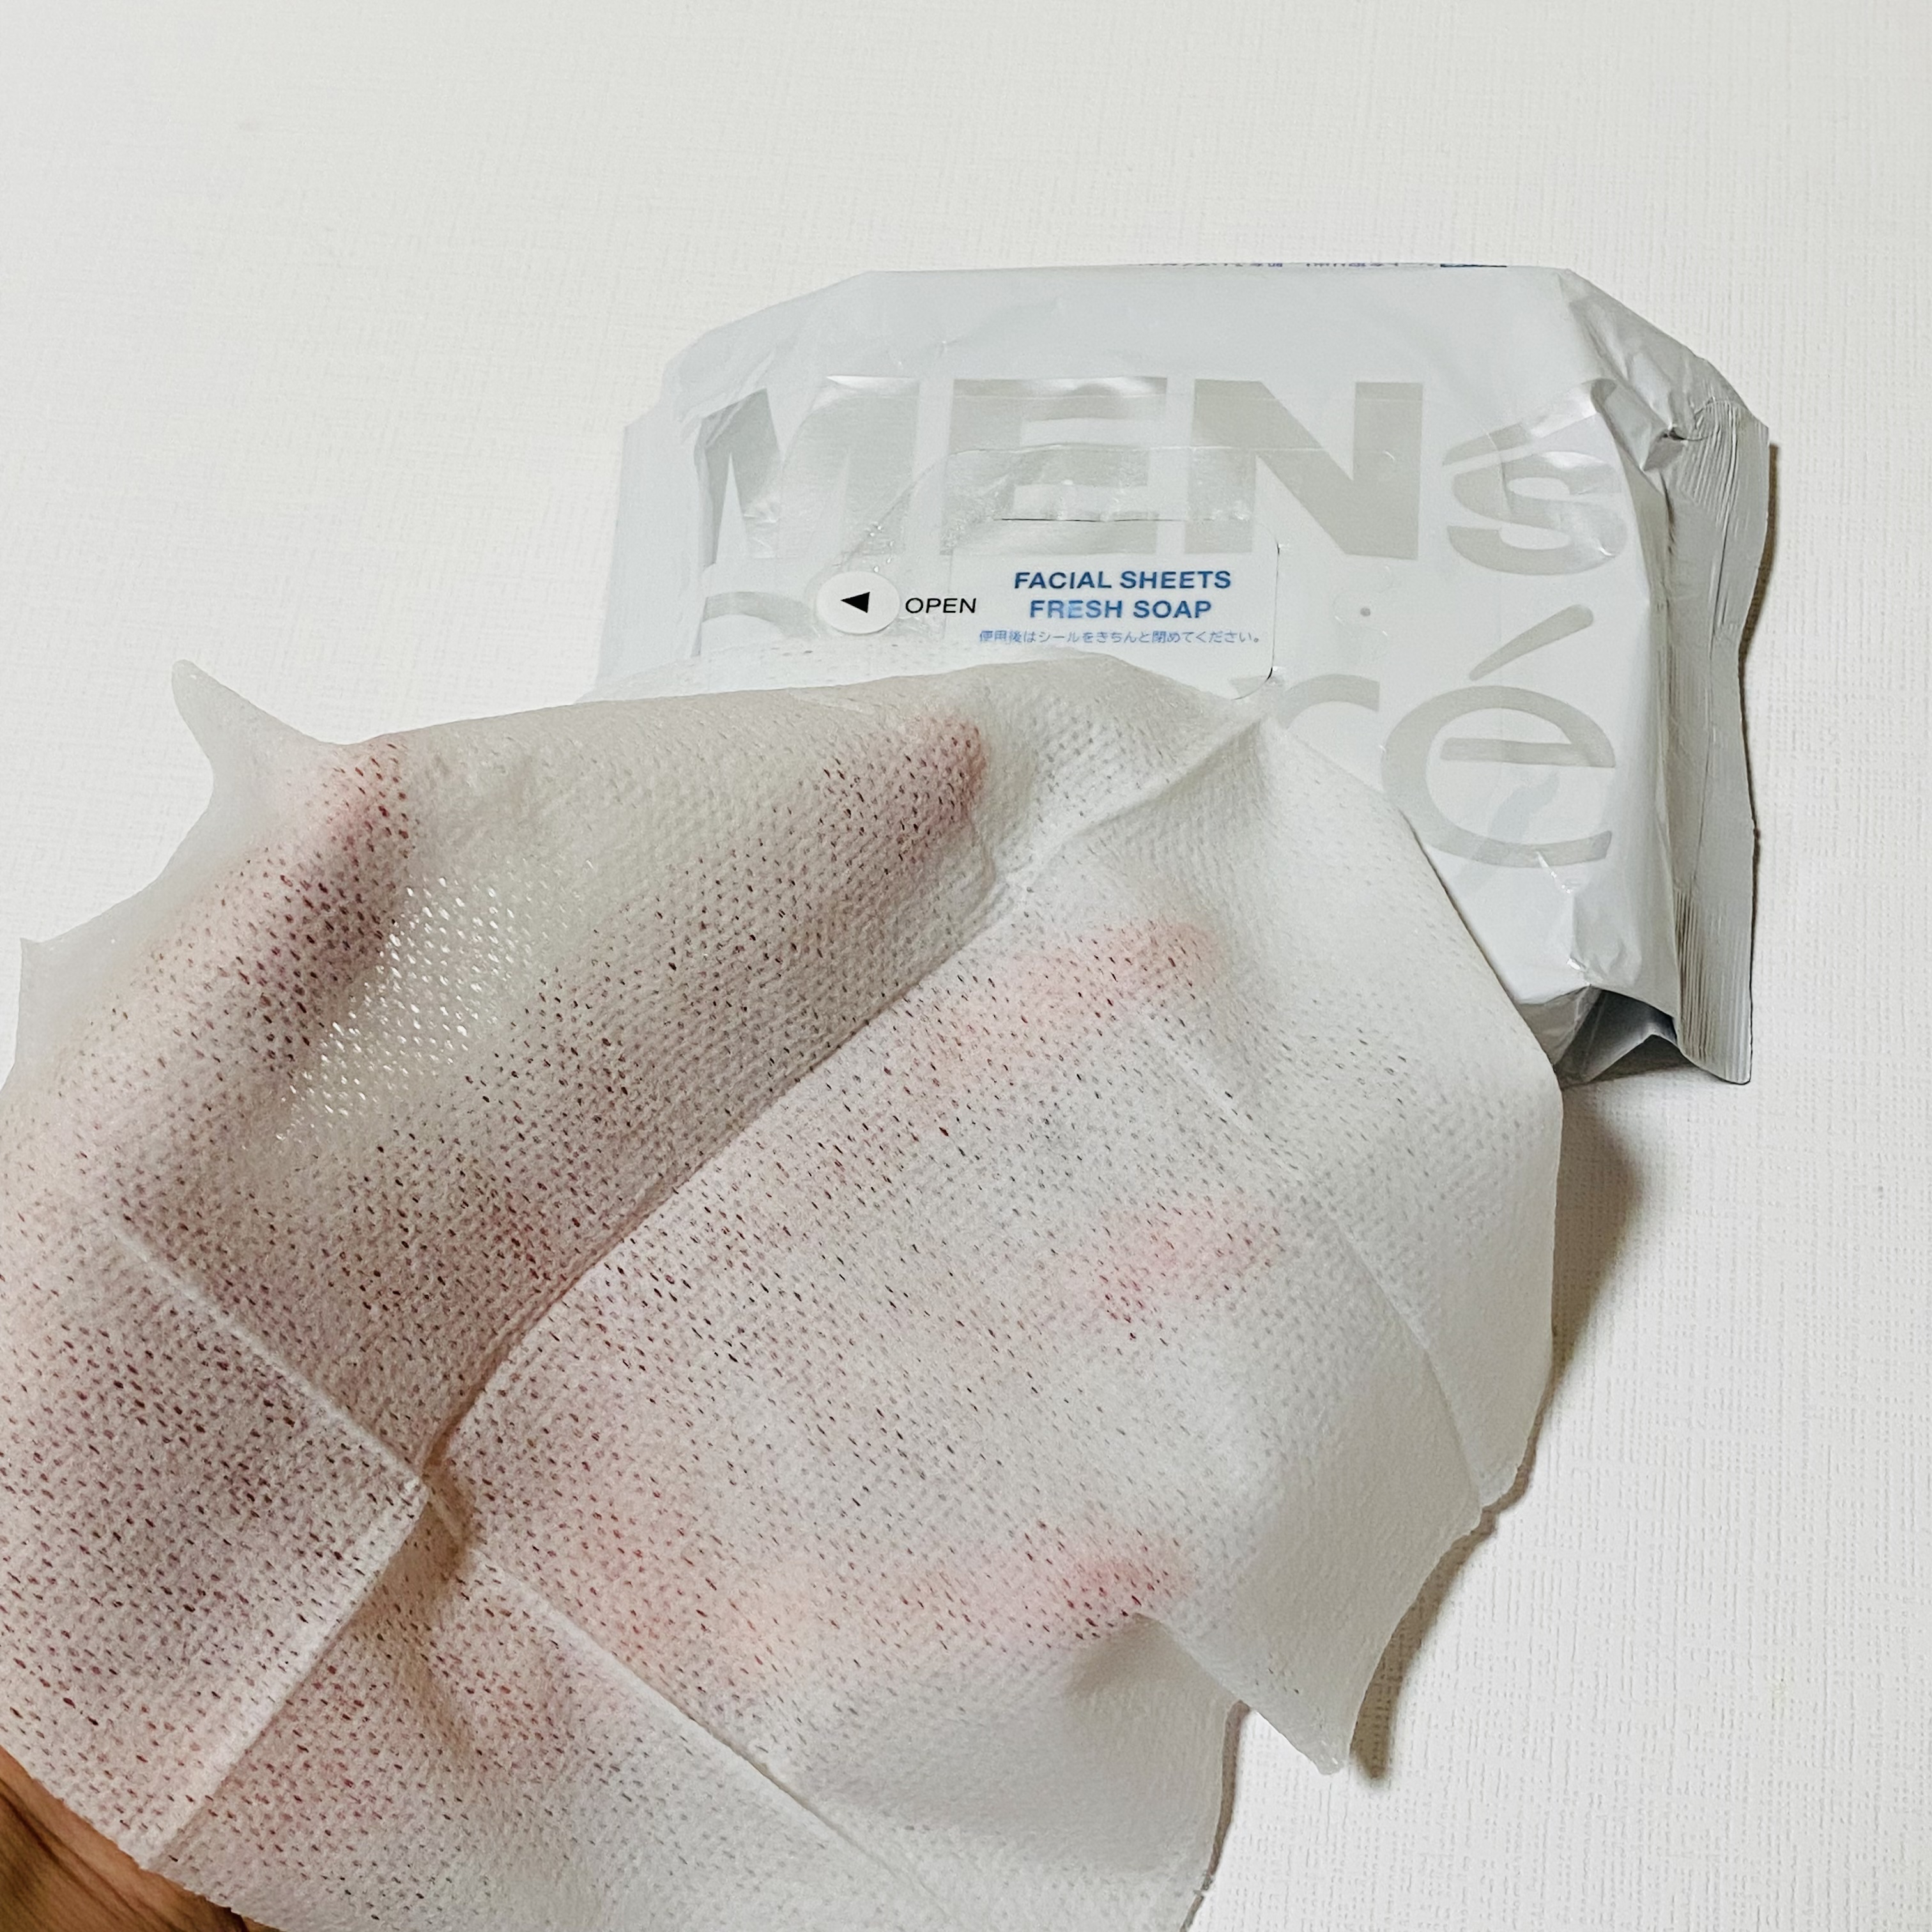 MEN's Bioré(メンズビオレ) 洗顔シートを使ったminoriさんのクチコミ画像2